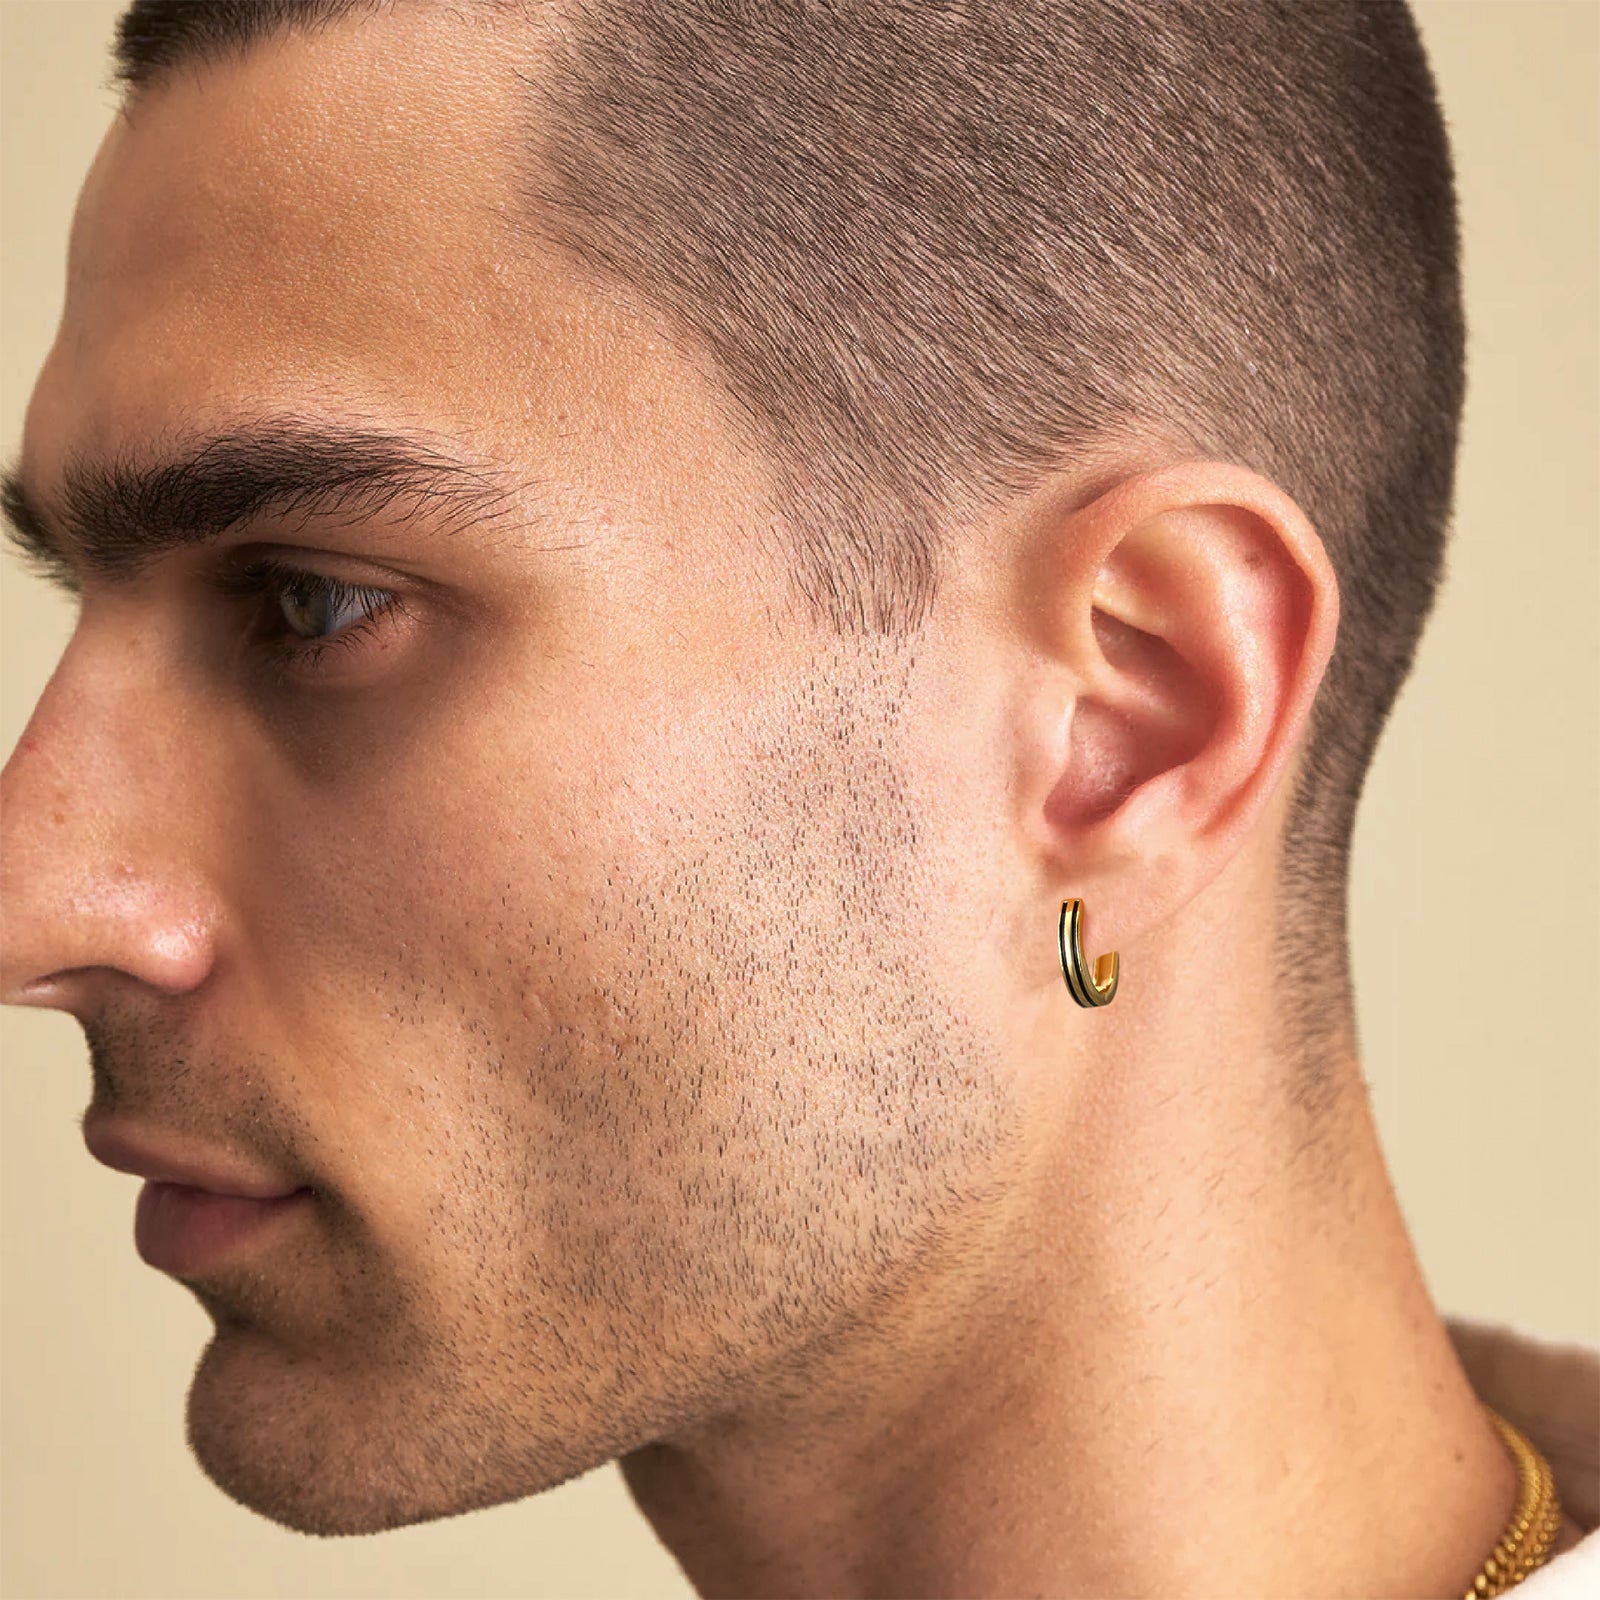 Wholesale Men's Earrings 15mm Sleek Black Stripe Hoop Earrings for Men